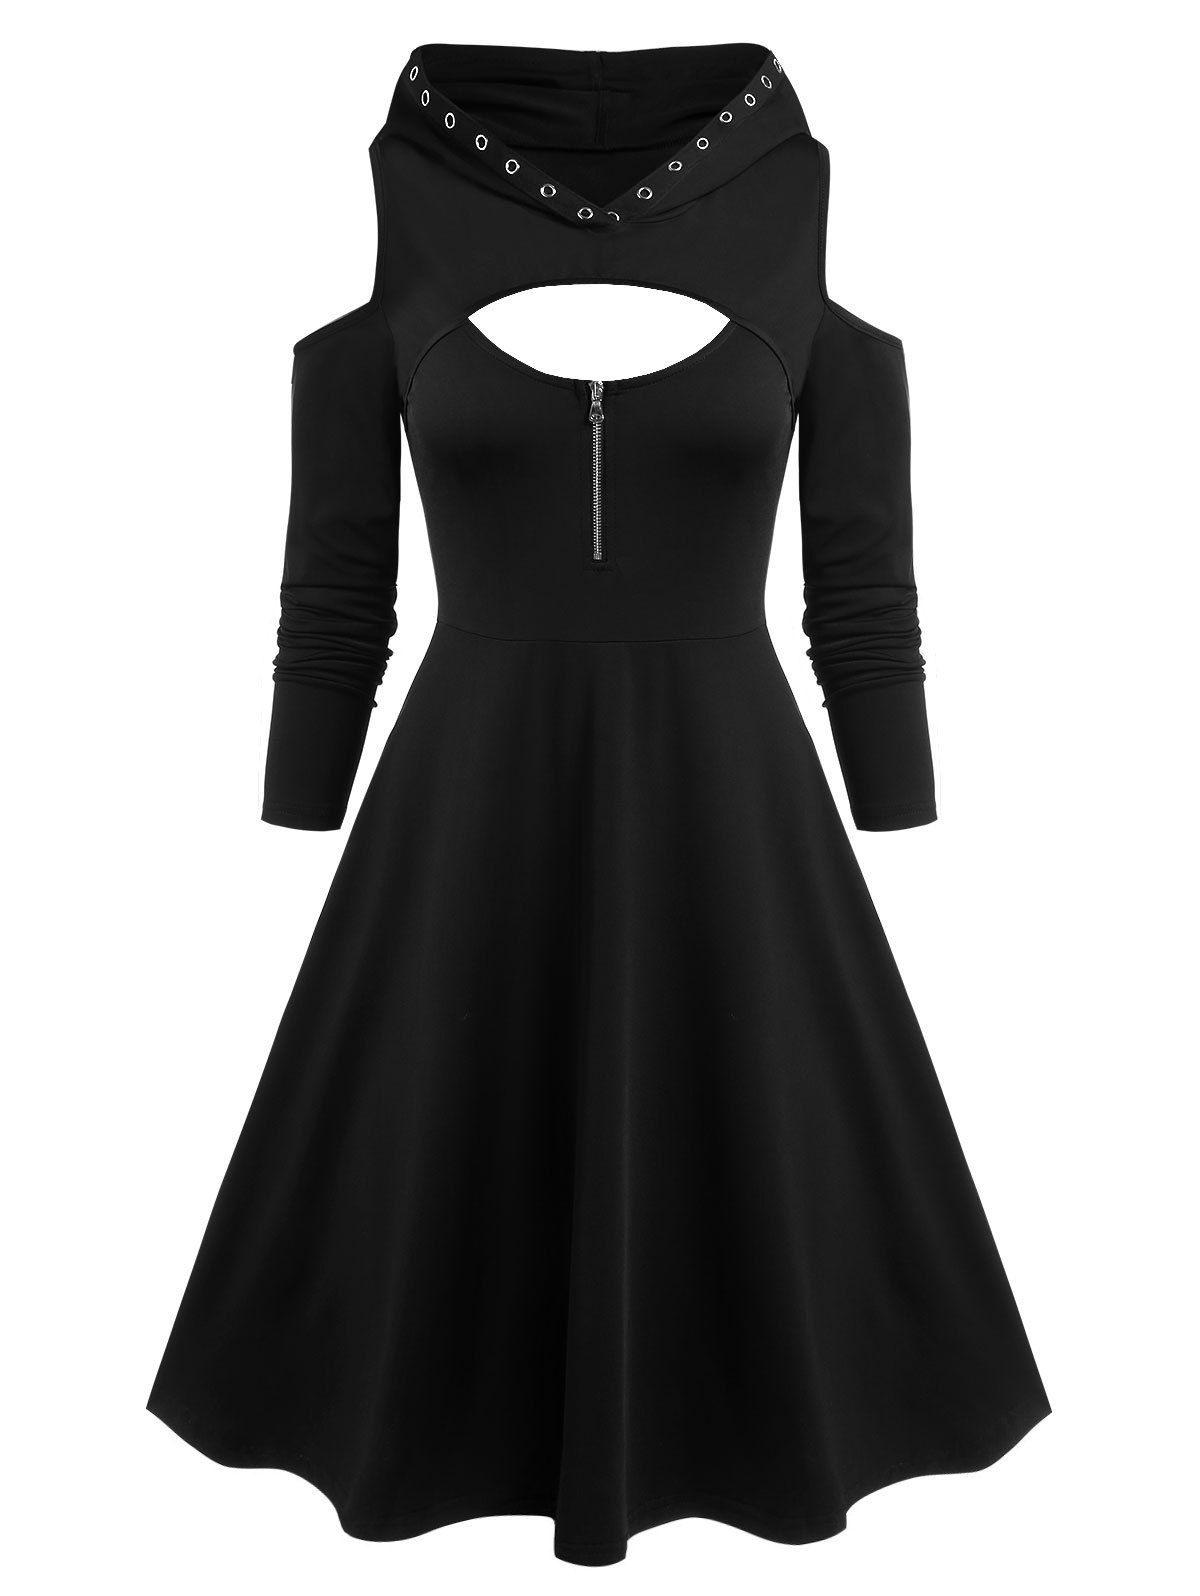 Cutout Hooded Eyelet Cold Shoulder Dress - BLACK XXL